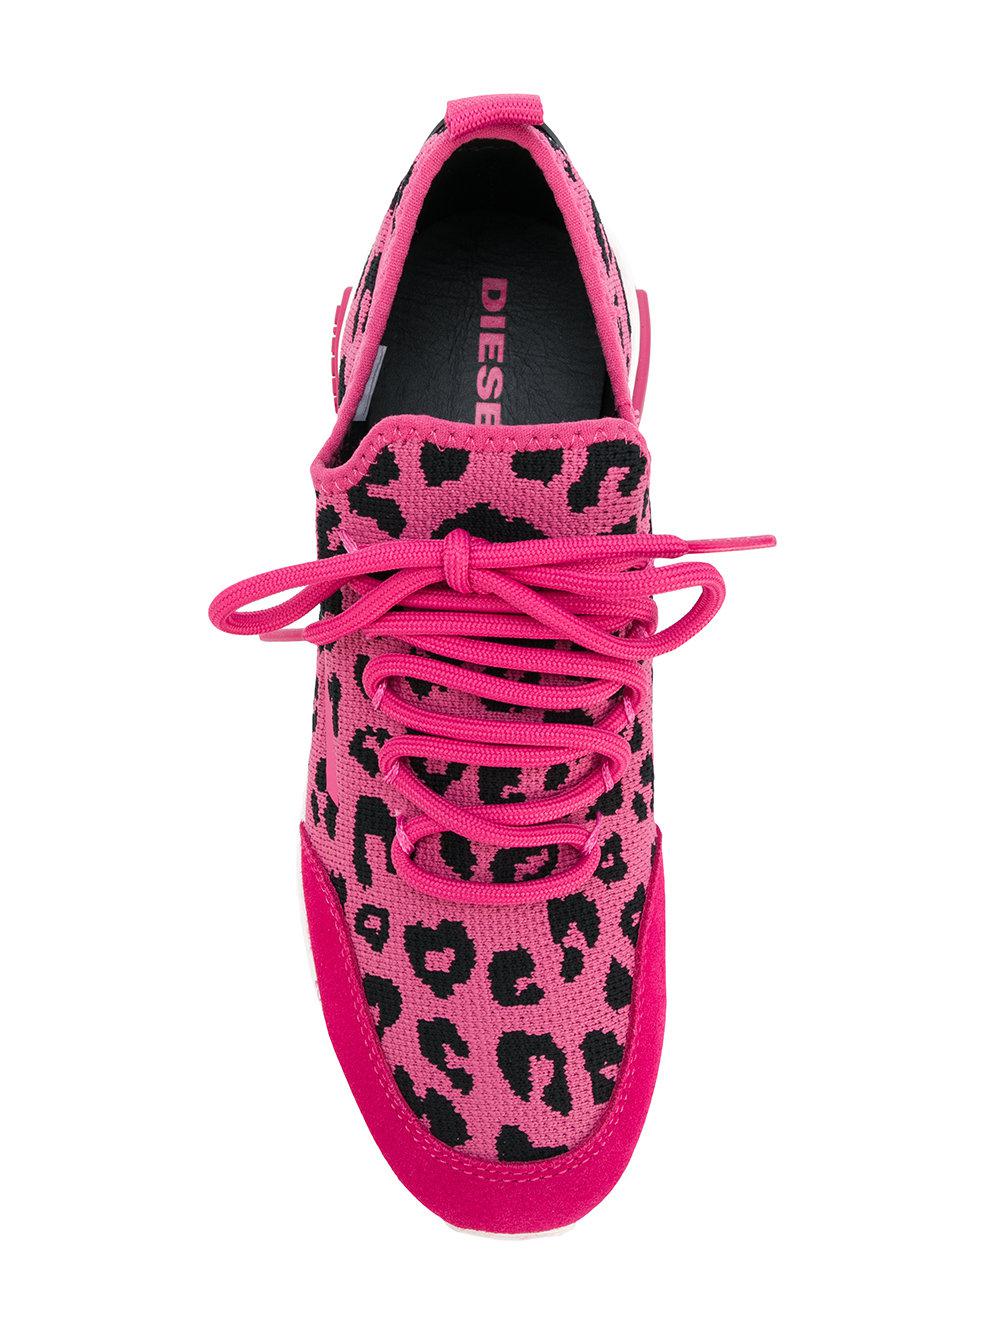 DIESEL Cotton Leopard Print Slip-on Sneakers in Pink & Purple (Pink) - Lyst